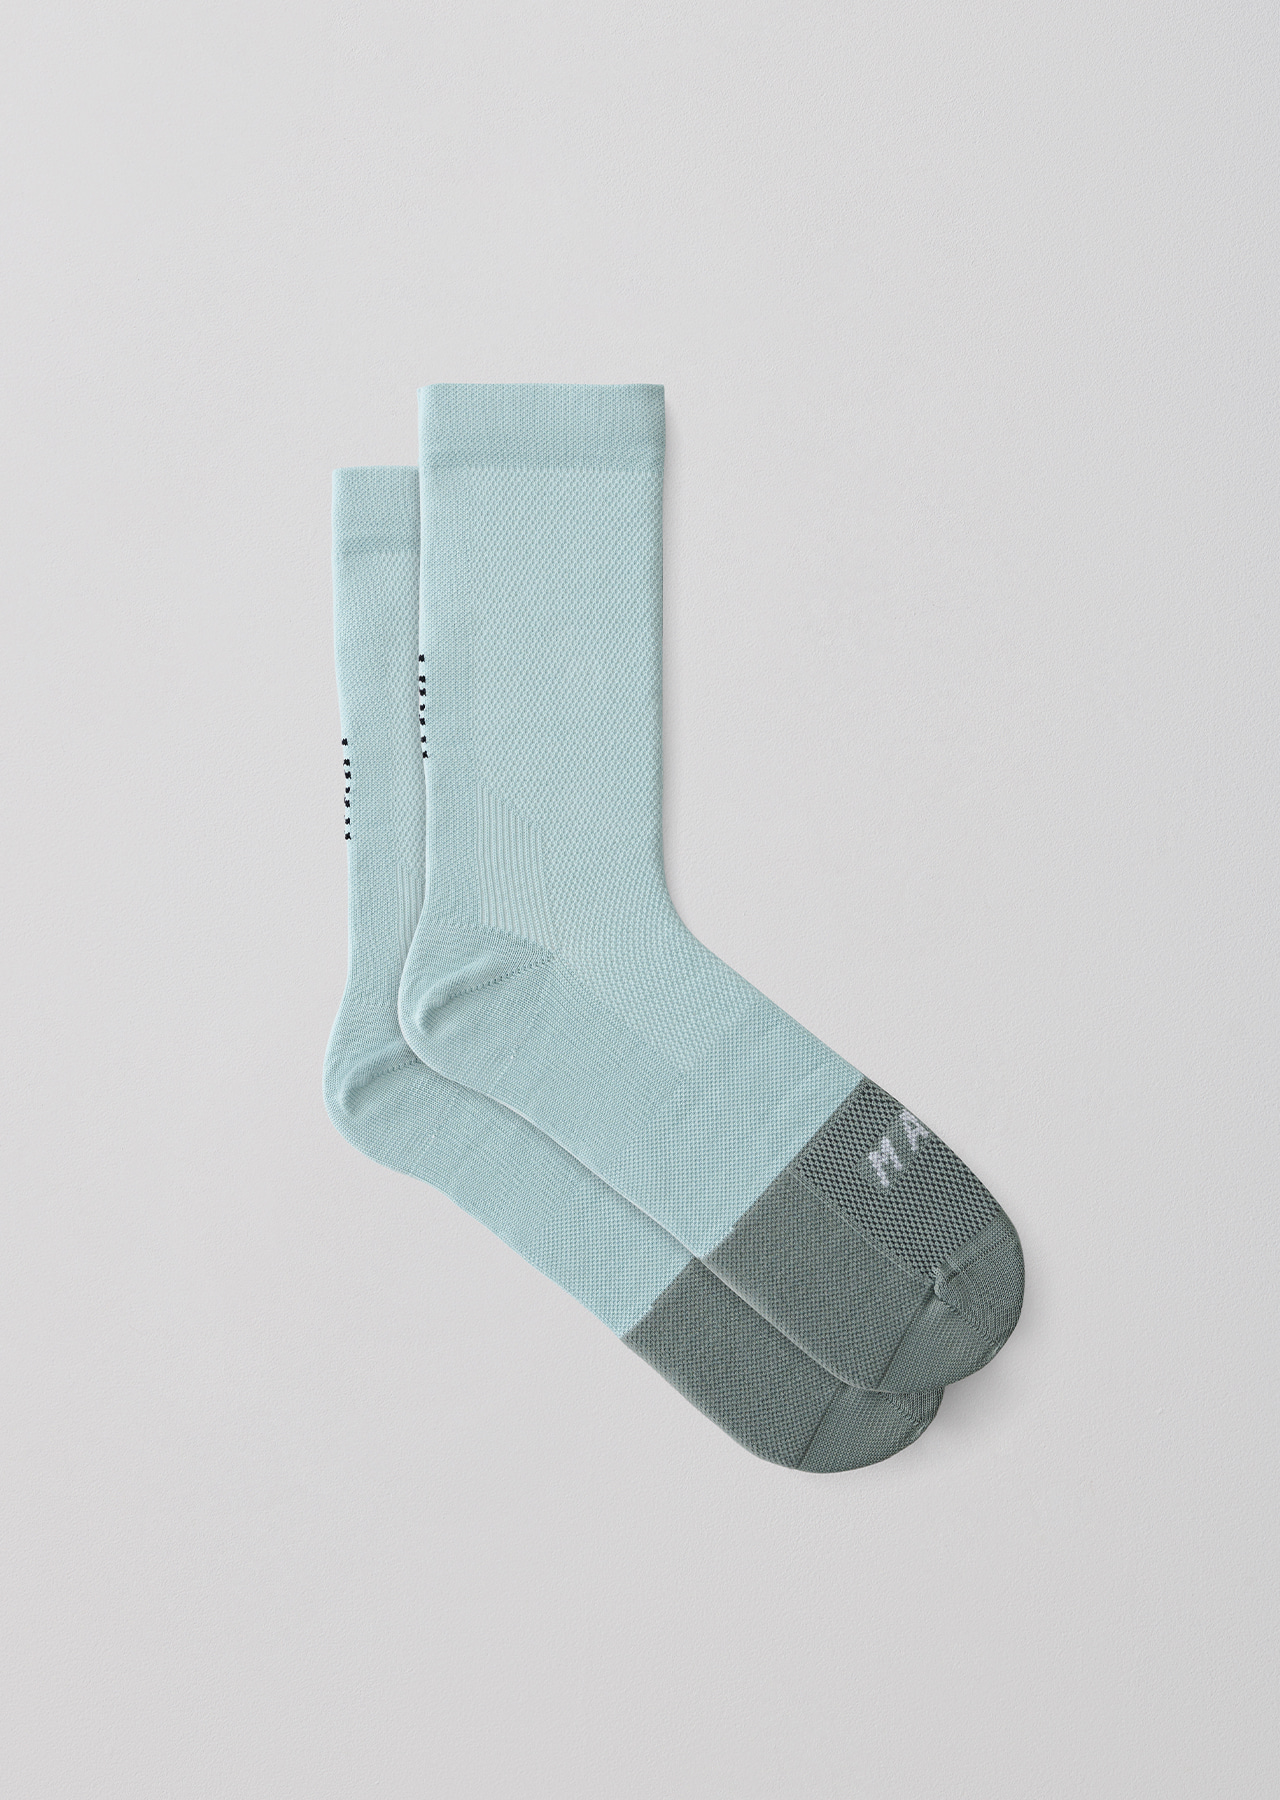 Division Sock (Nimbus)